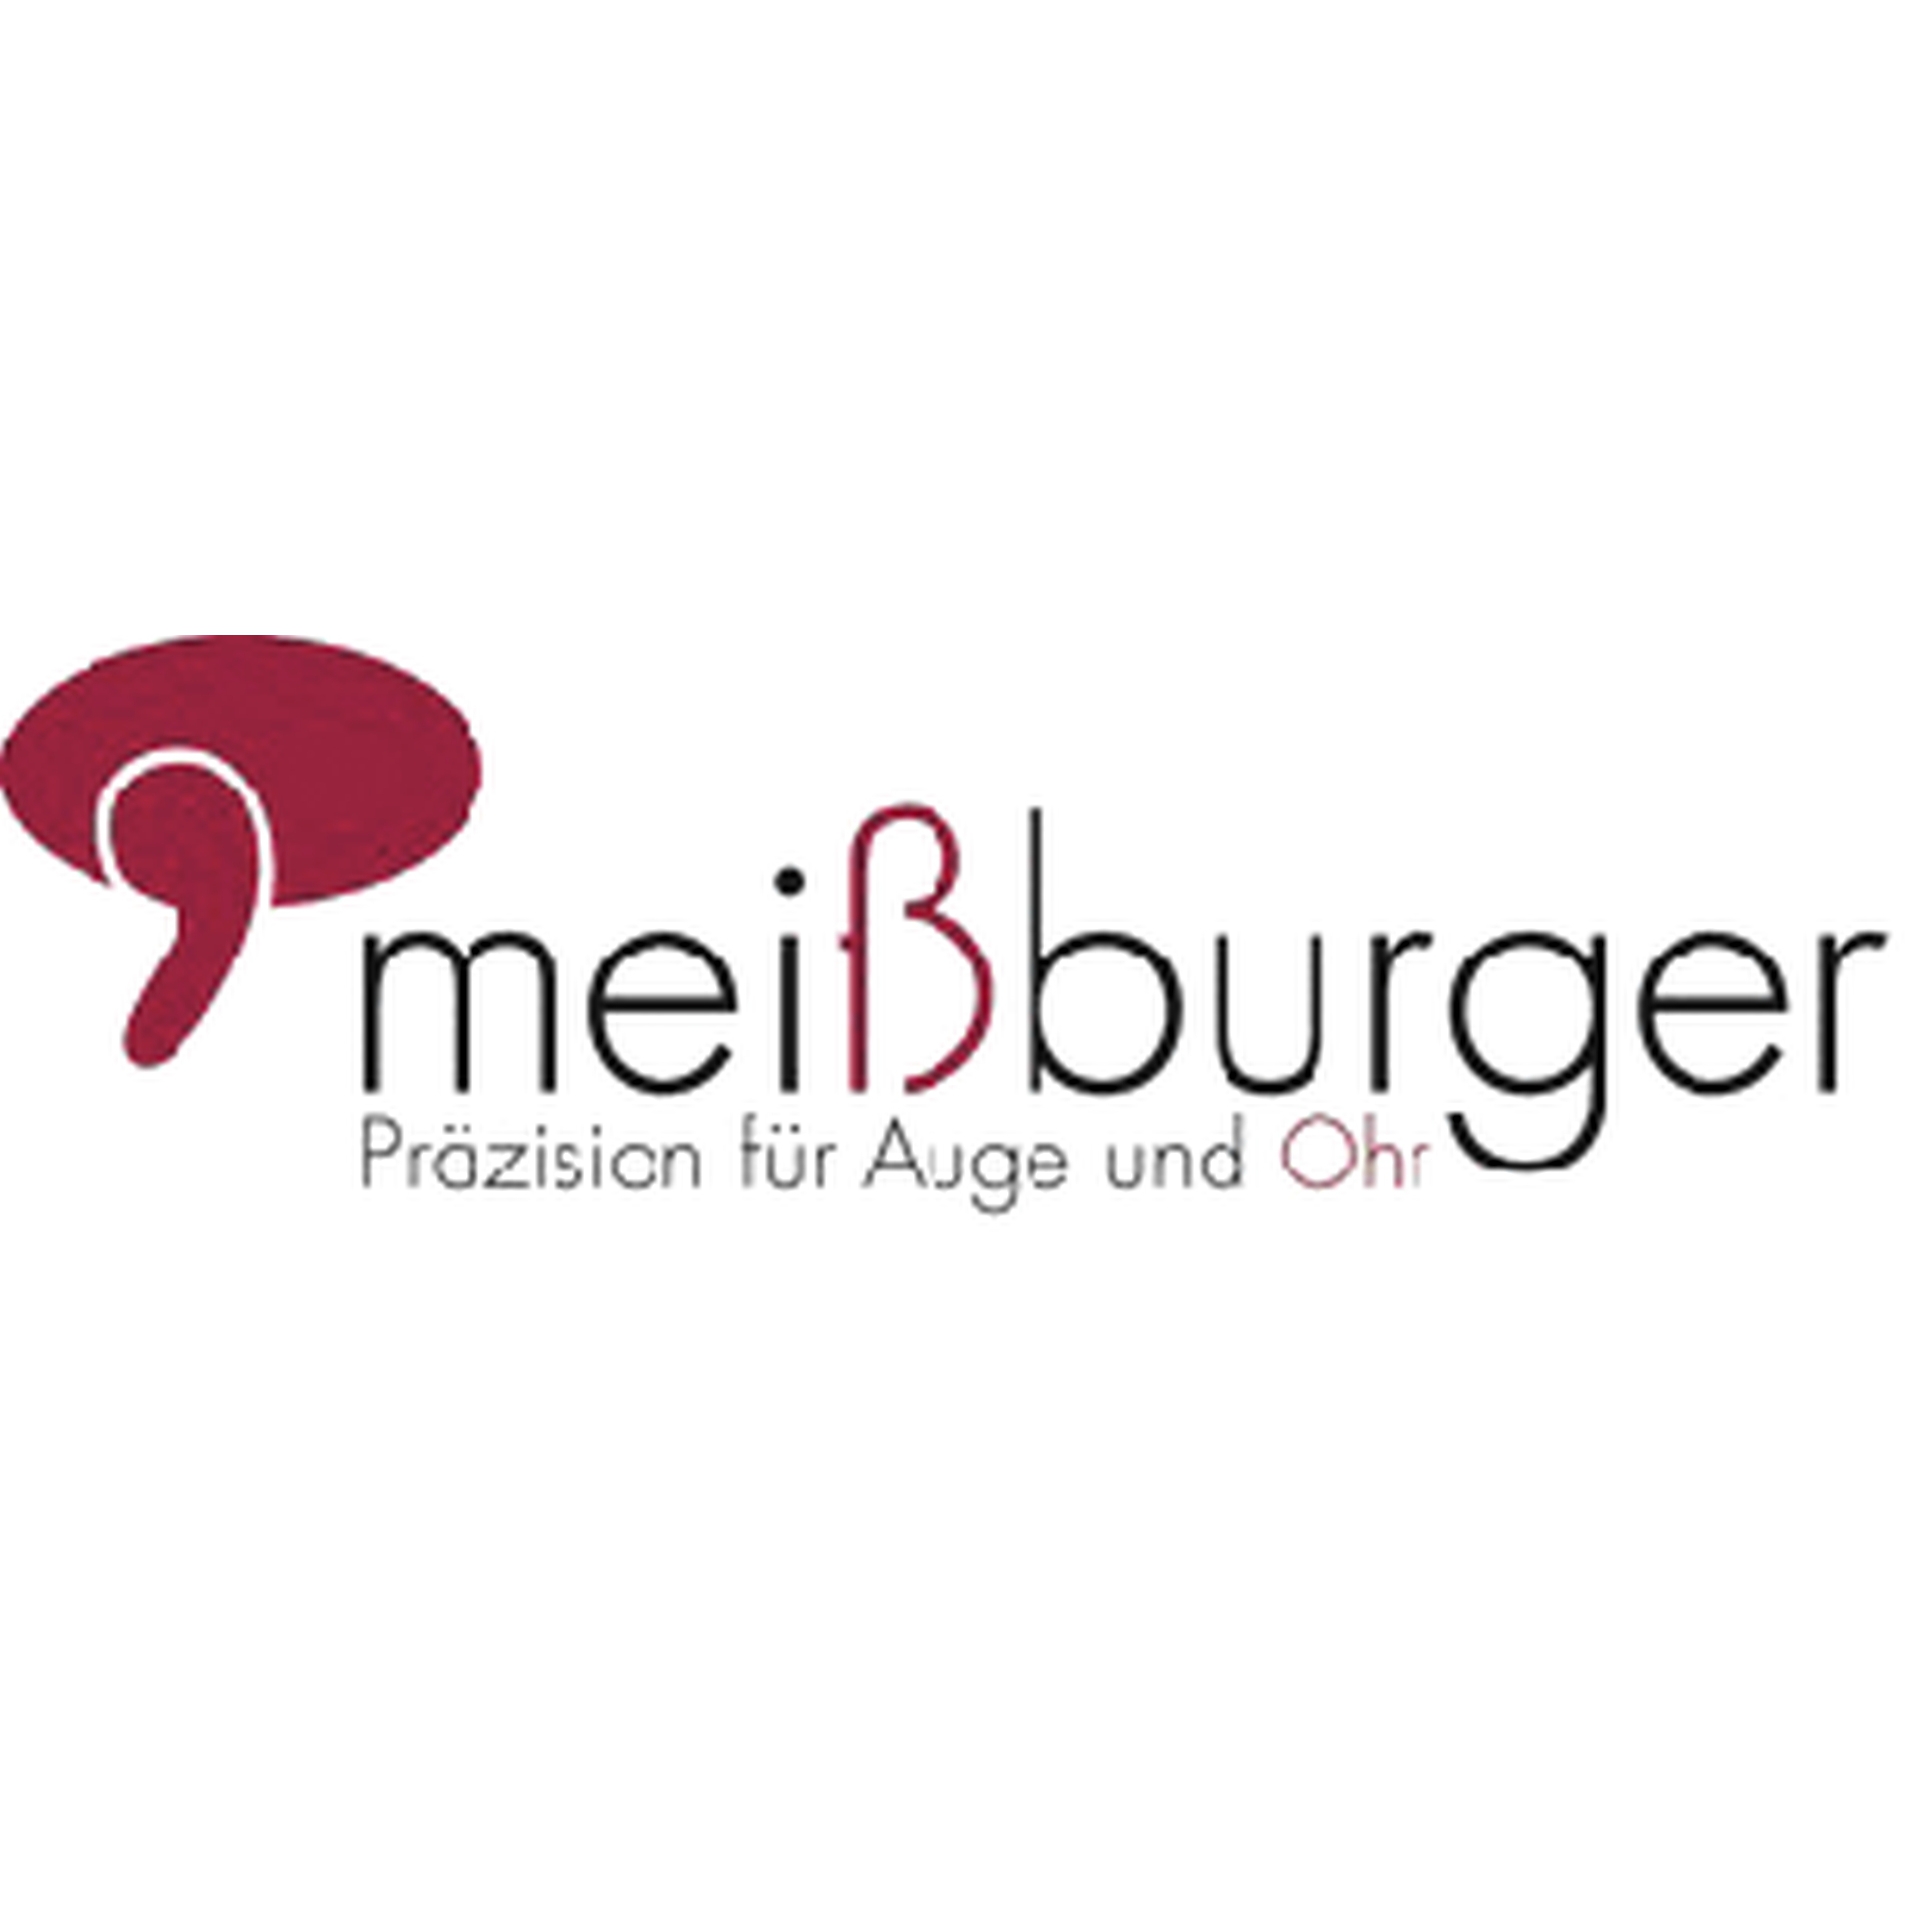 Hans Meißburger GmbH  